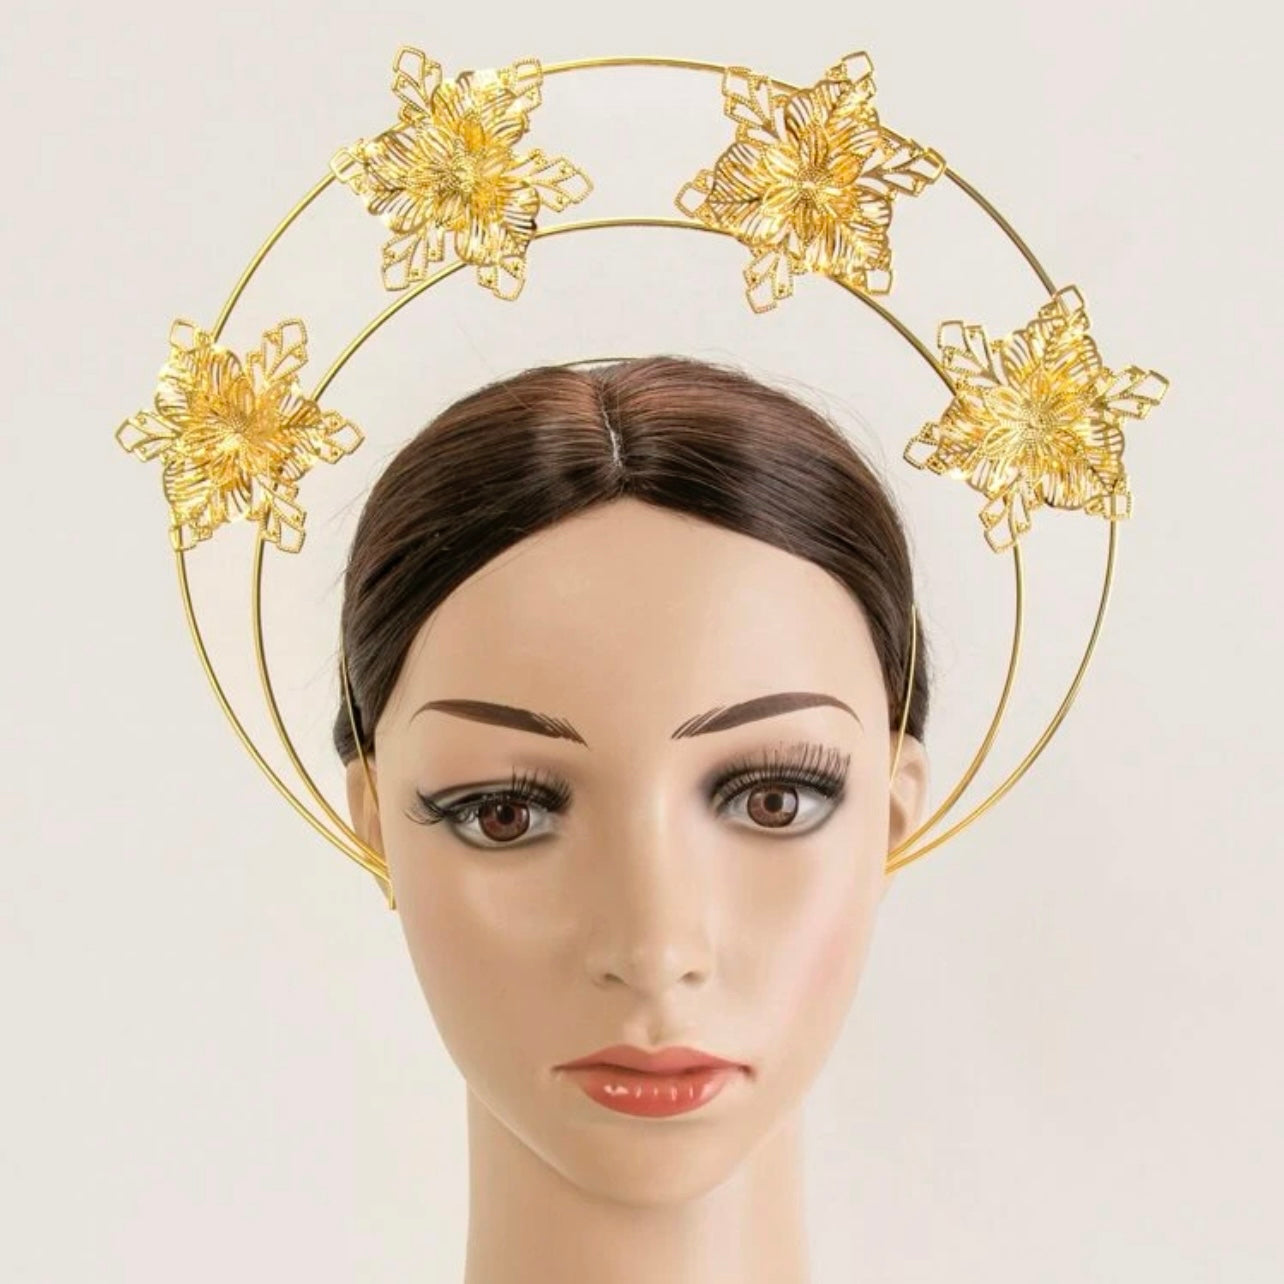 Gold Goddess Headband - Gold Star Headband, Celestial Headpiece, Goddess Headpiece, Birthday Party, Star Goddess